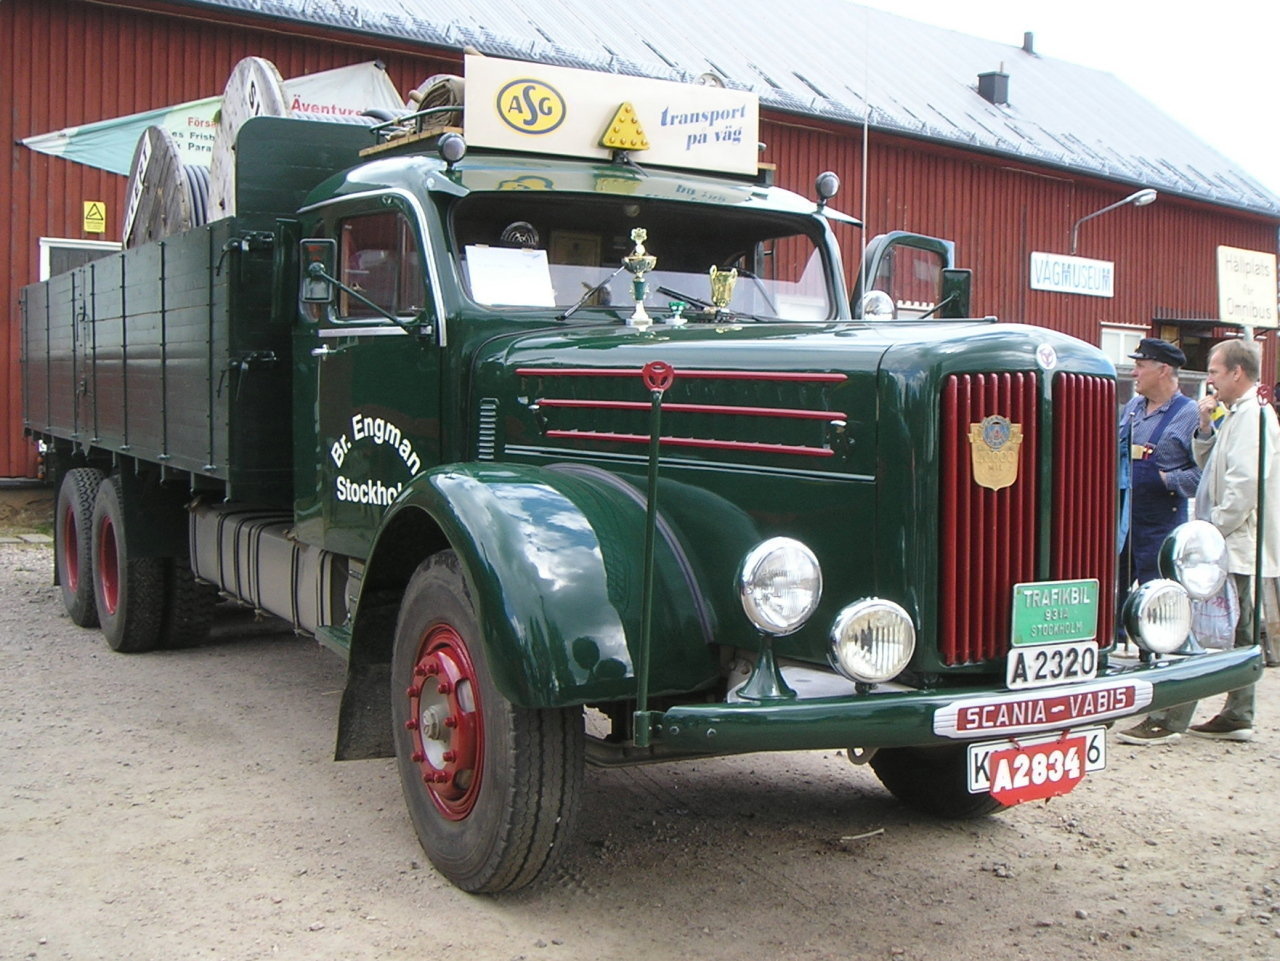 Scania-Vabis LS85 â€“ Sweden